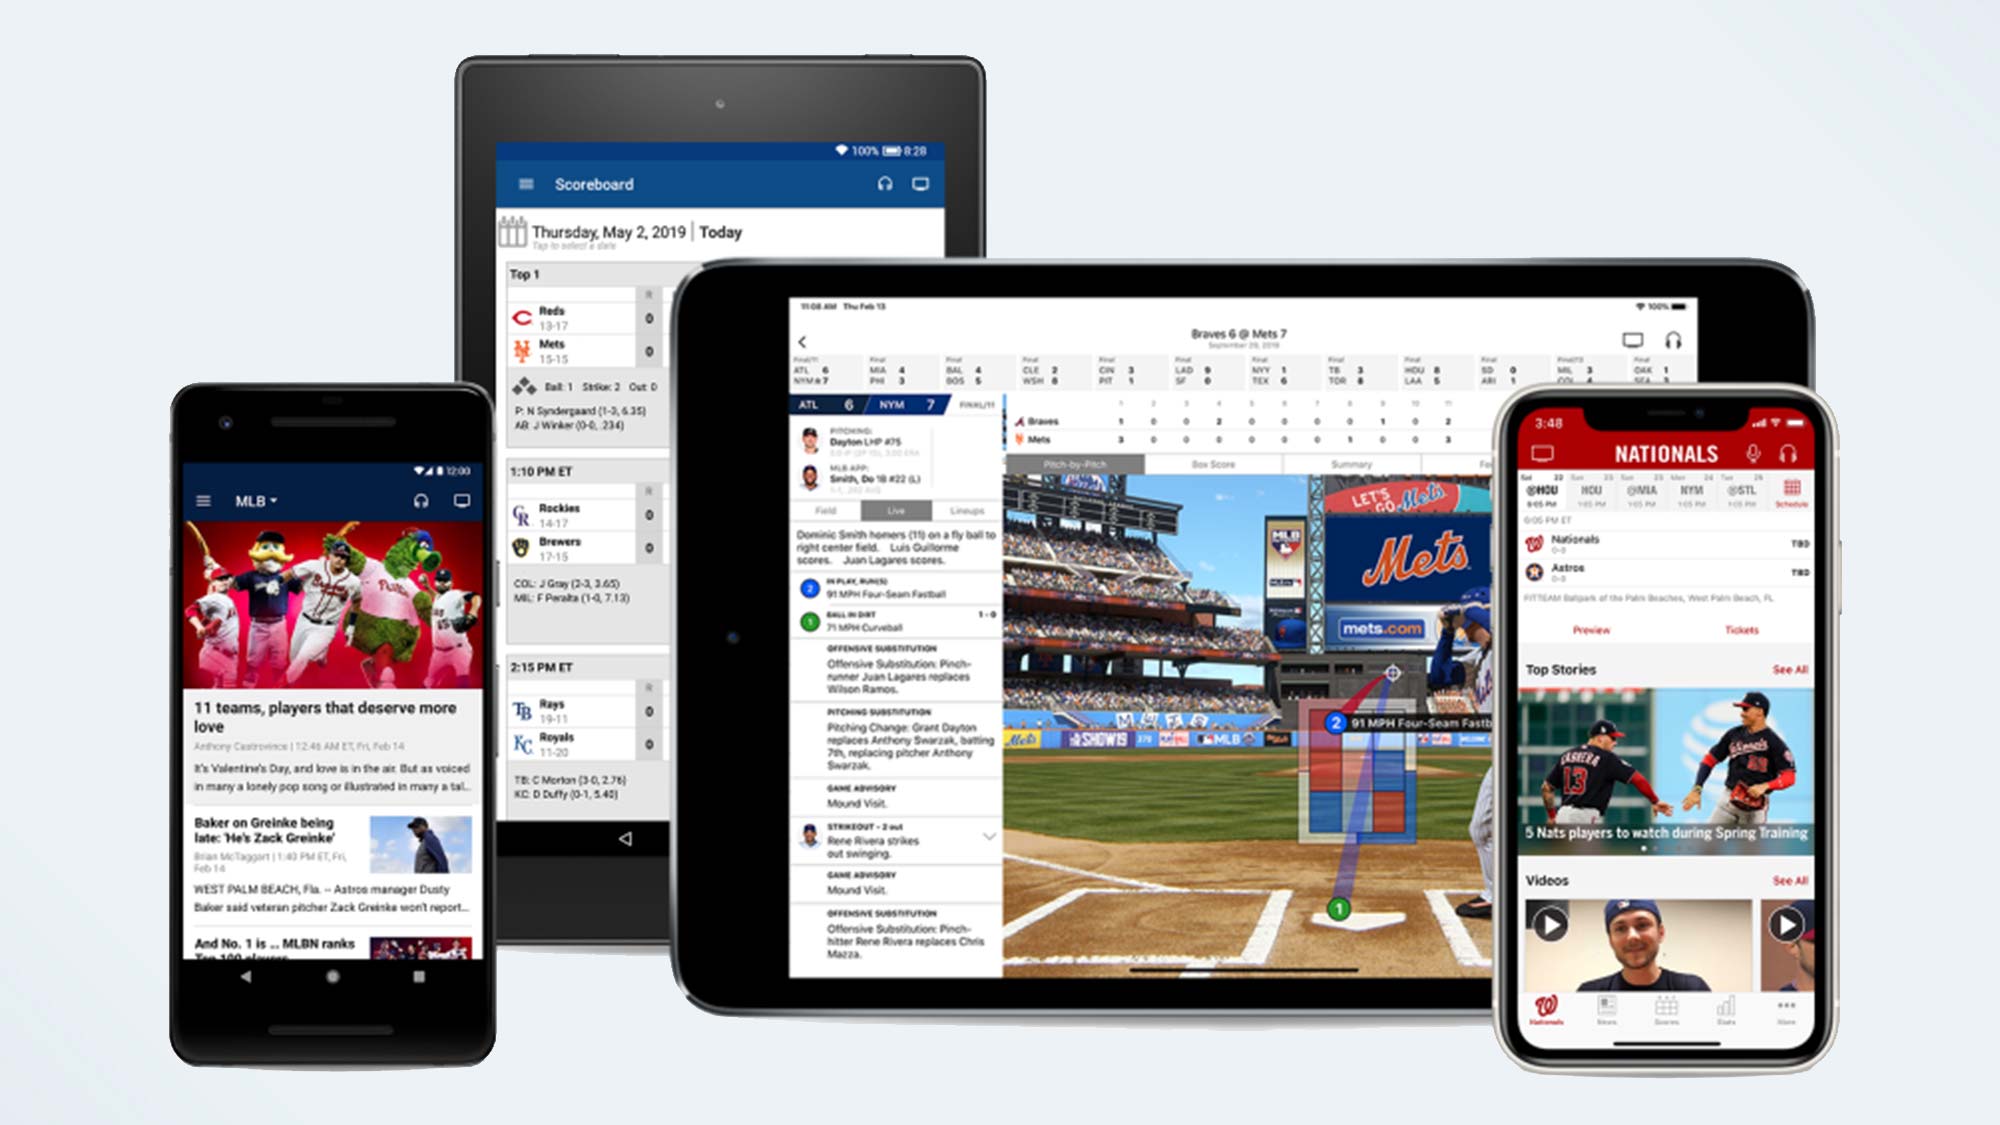 Facebook Free MLB LiveStreaming Games Six Games Set Under 2019 Deal   Variety